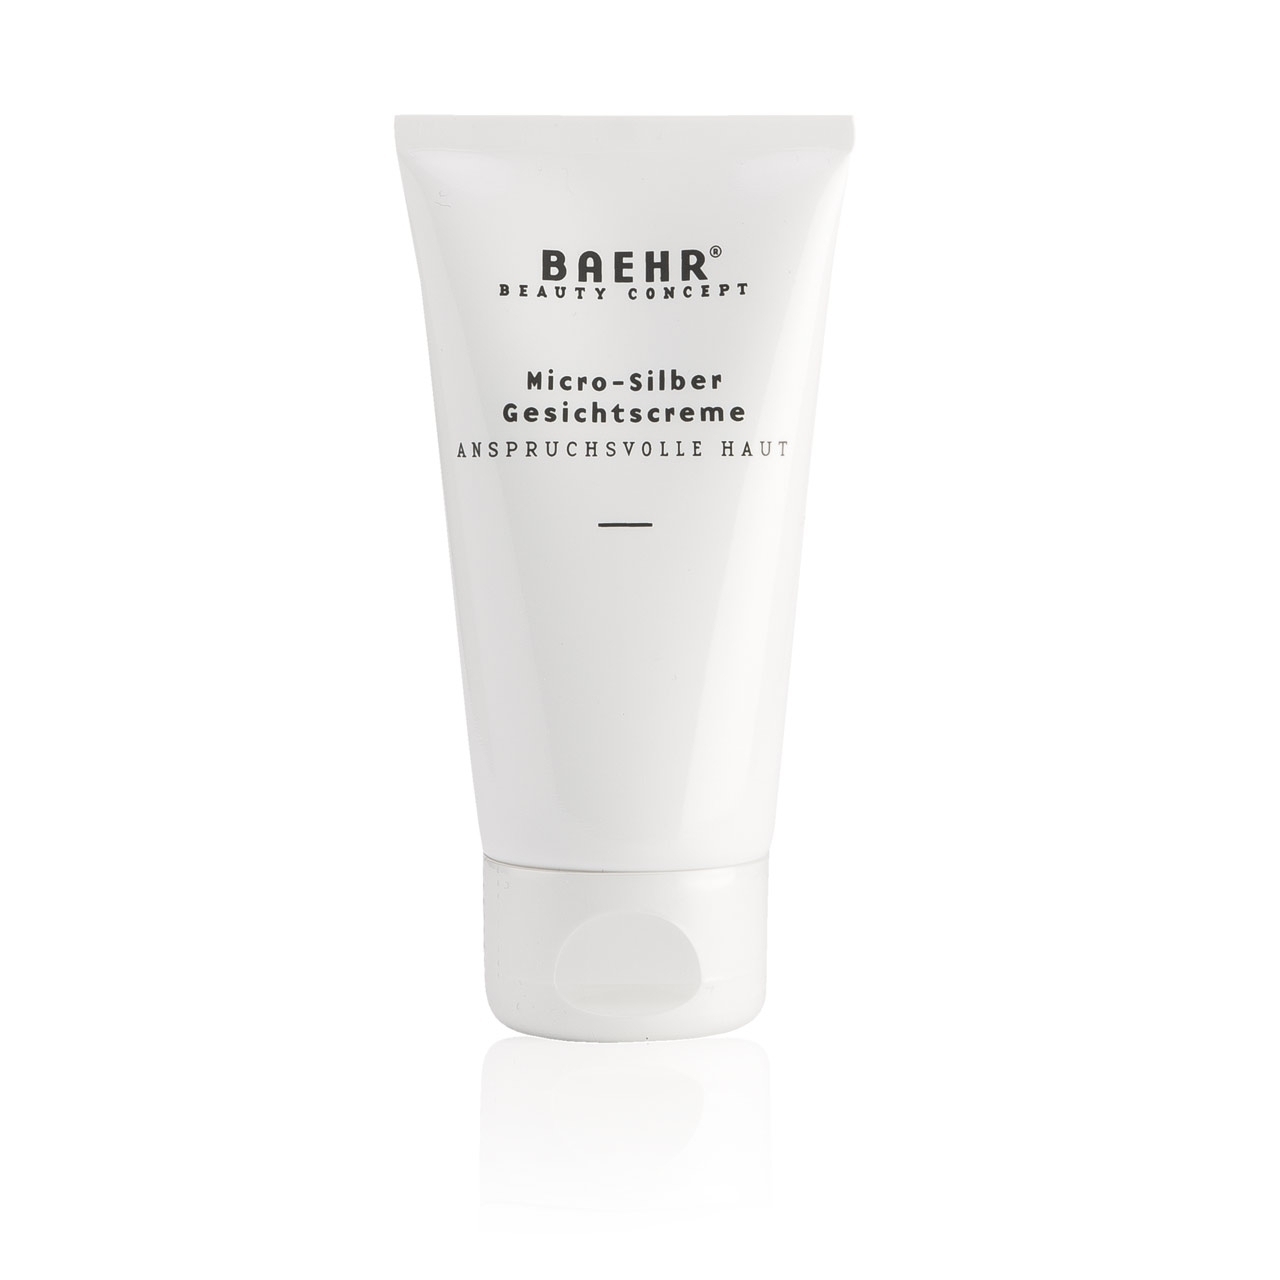 BAEHR BEAUTY CONCEPT - Micro-Silber Gesichtscreme, 50 ml